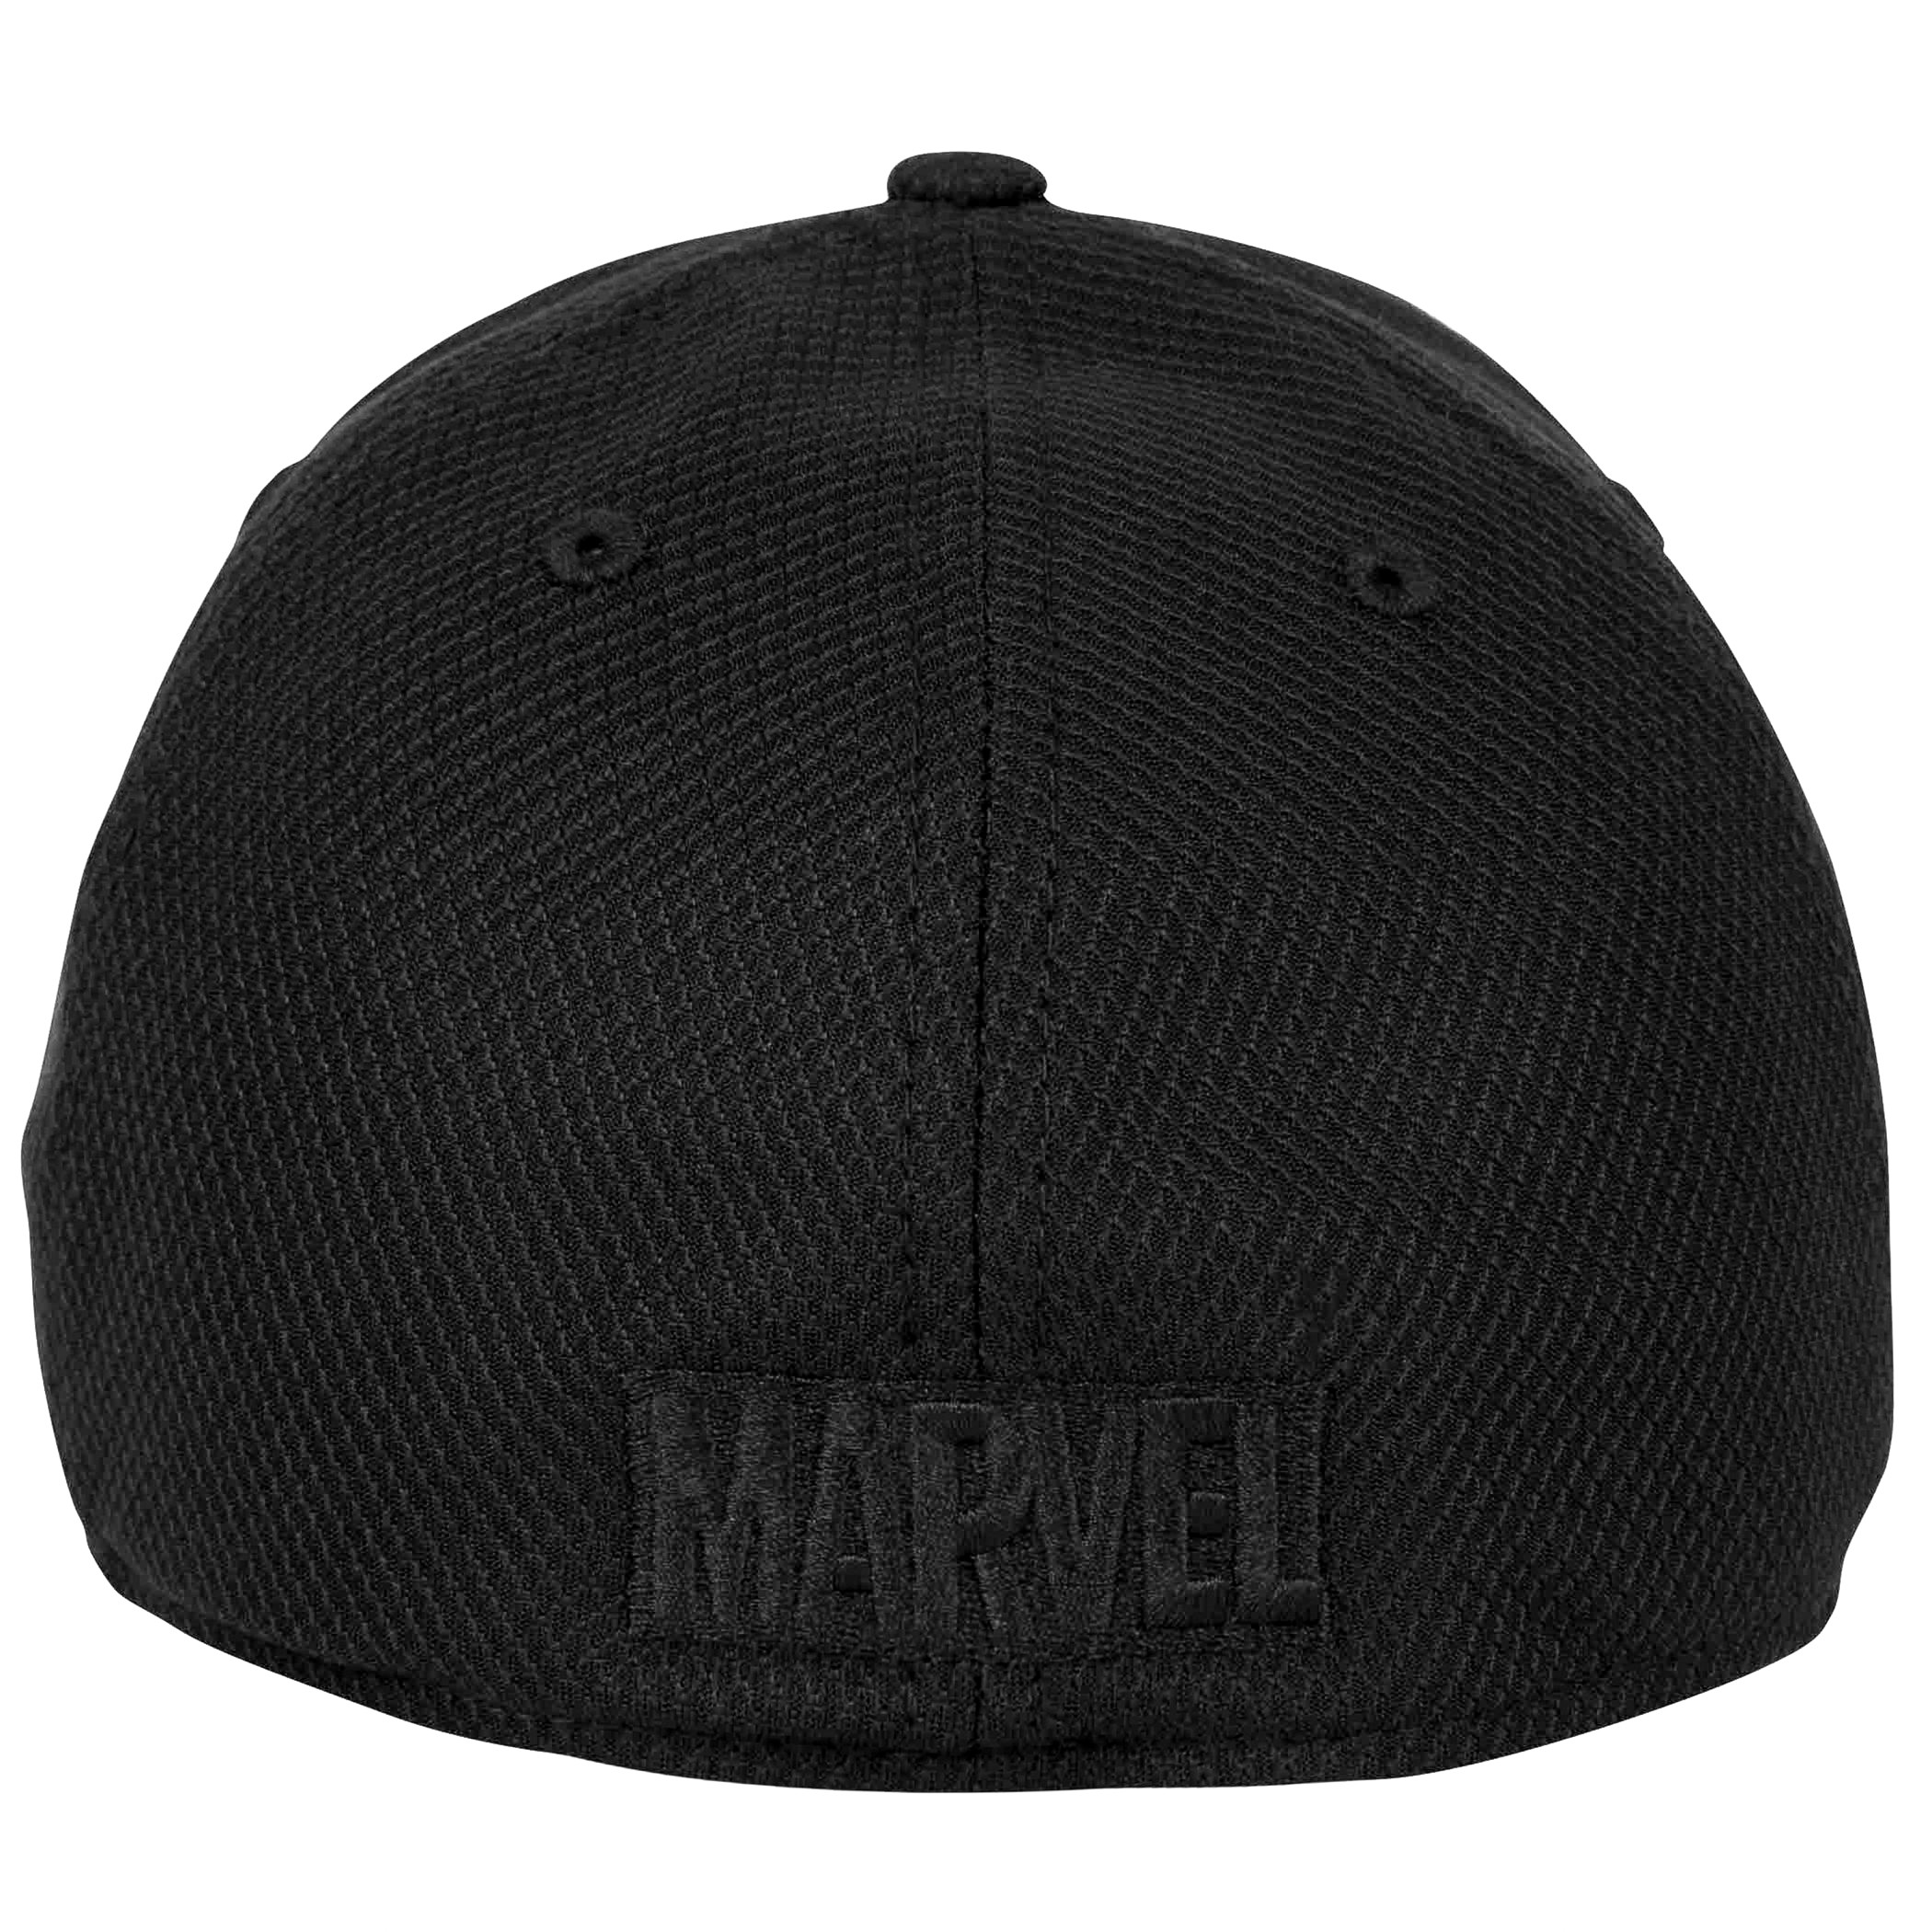 Daredevil Logo Black on Black New Era 39Thirty Fitted Hat